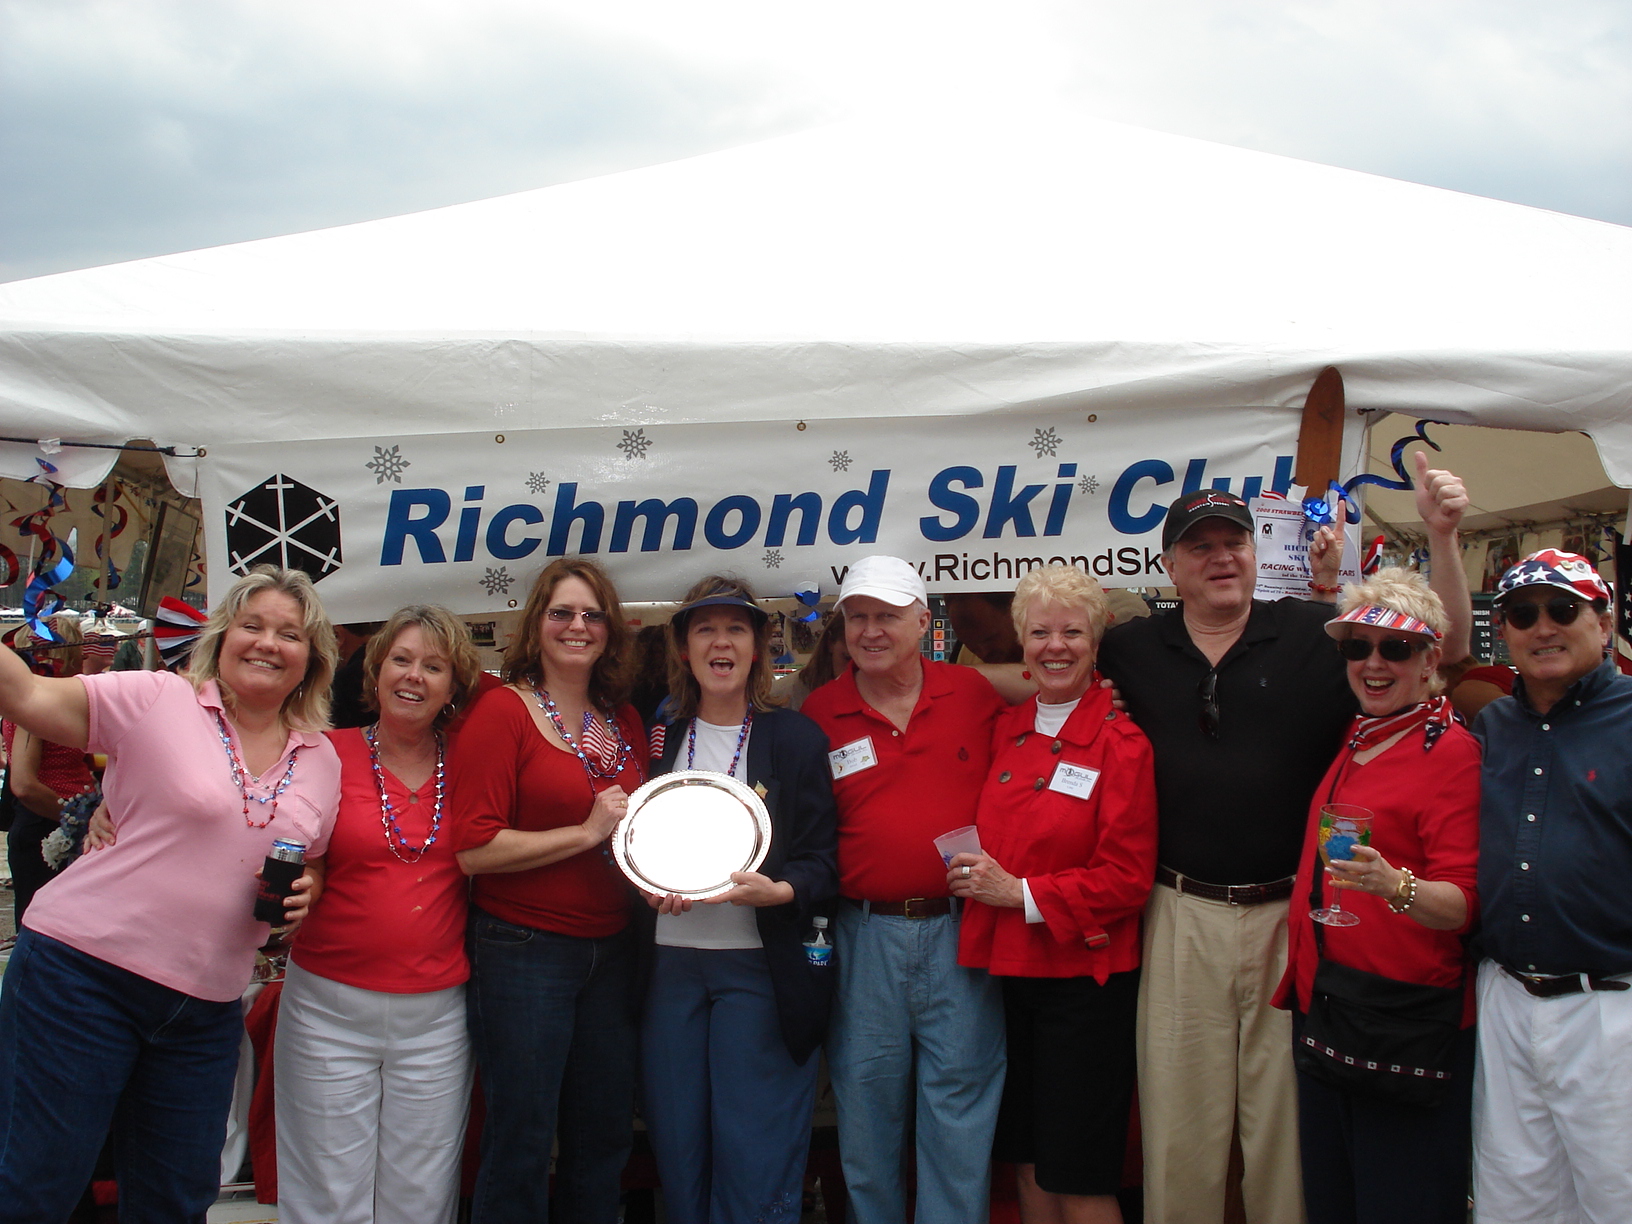 Richmond Ski Club year-round activities